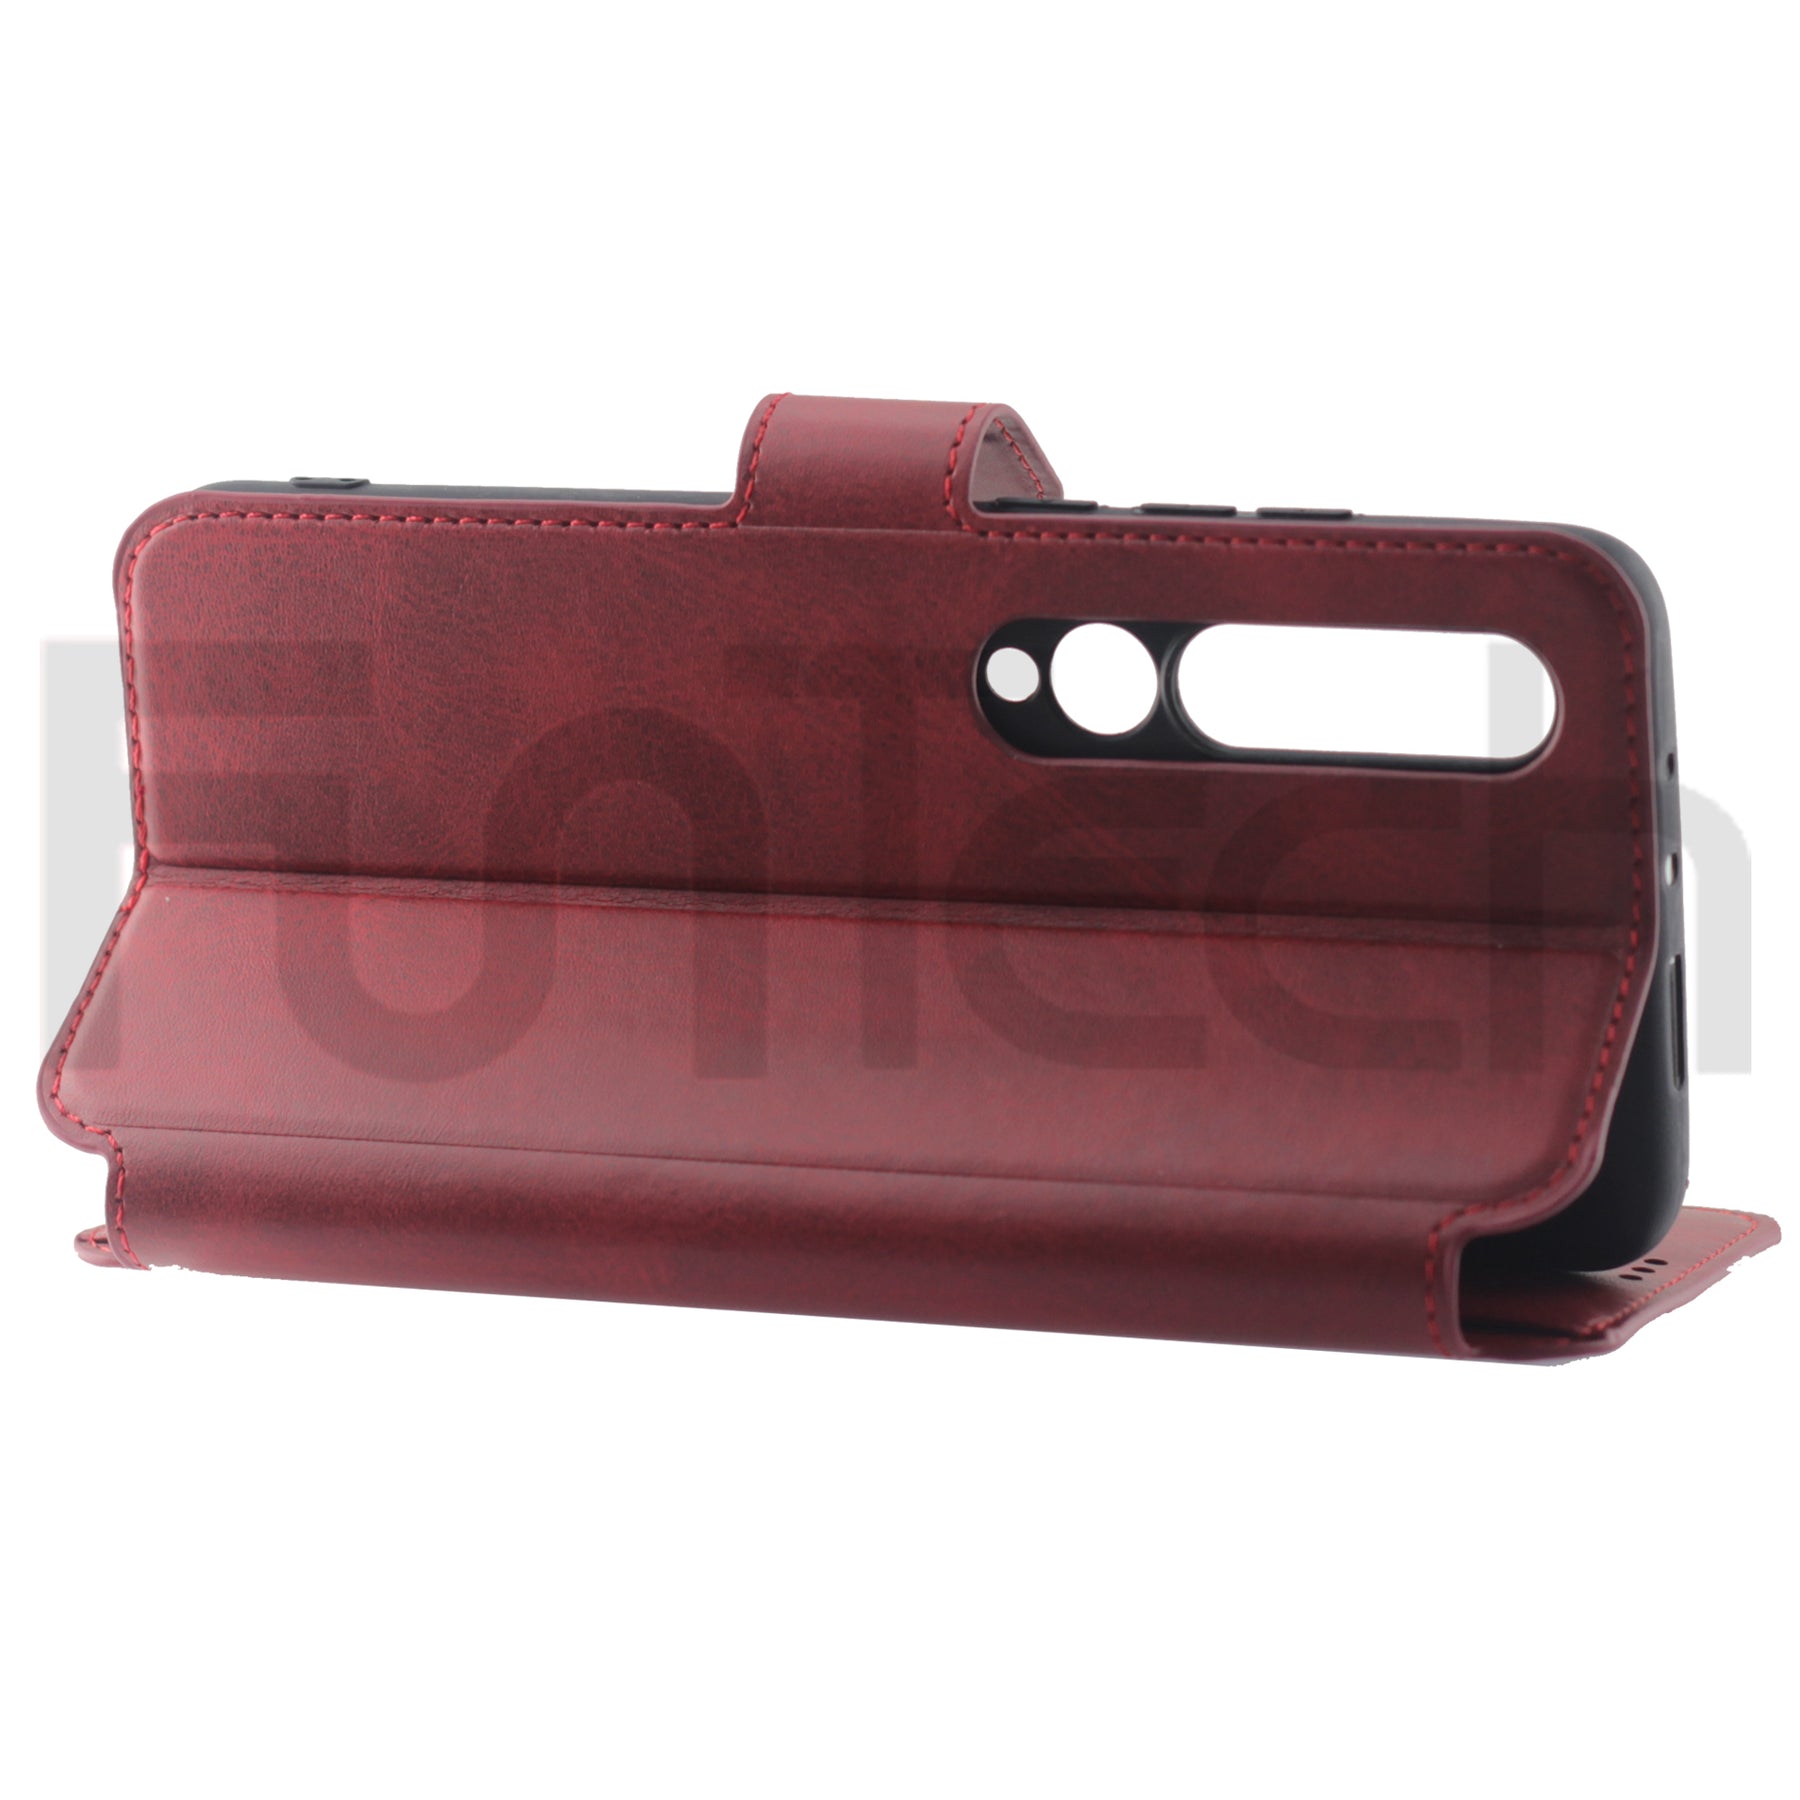 Xiaomi Mi10, Leather Wallet Case, Color Red.